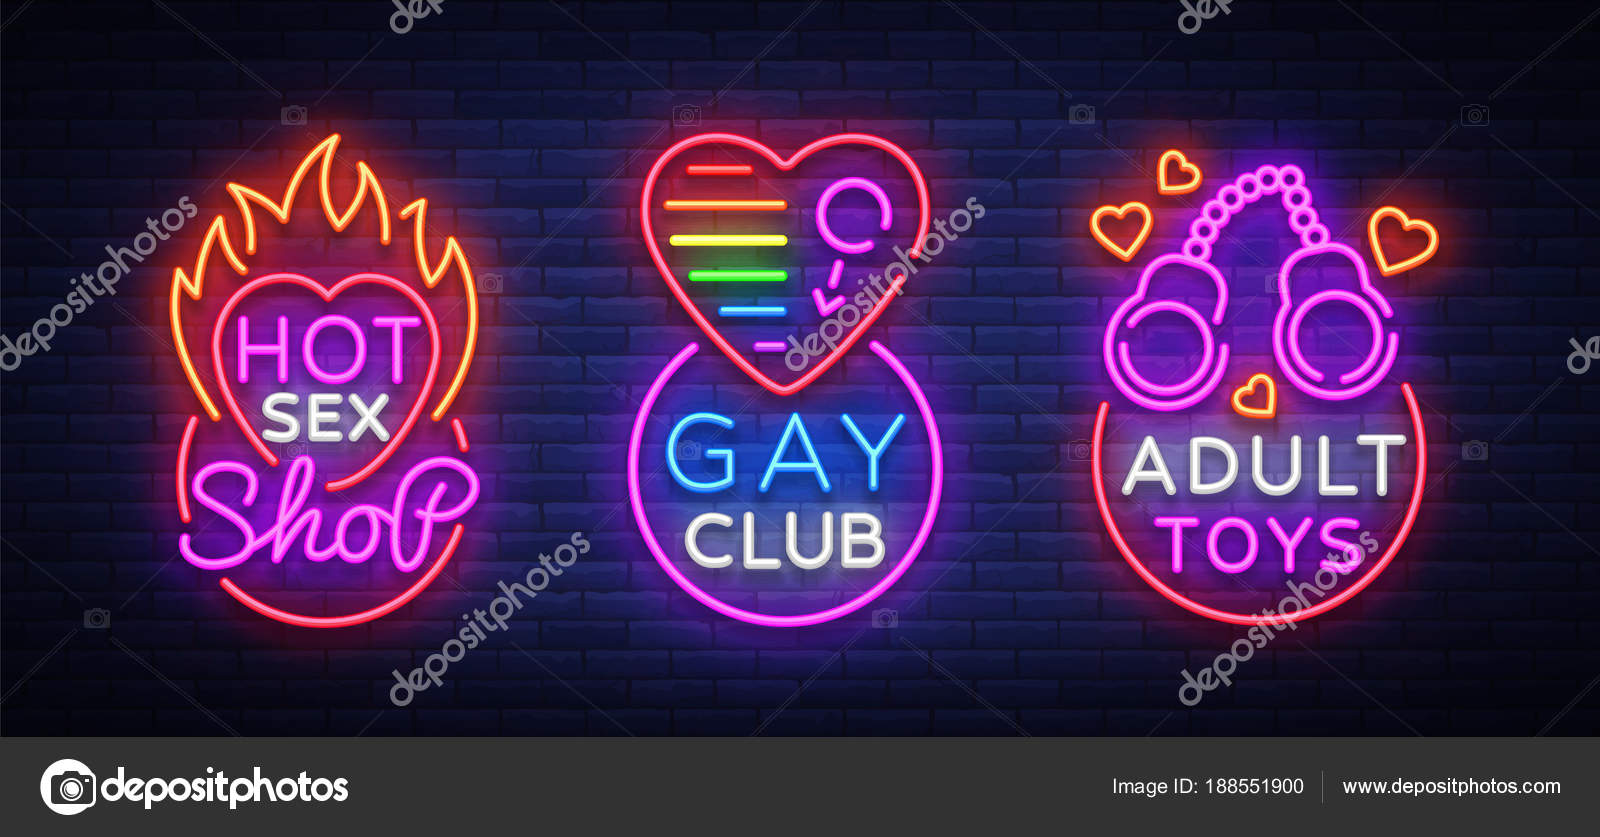 Gay club neon sign. Logo in neon style, light banner, billboard